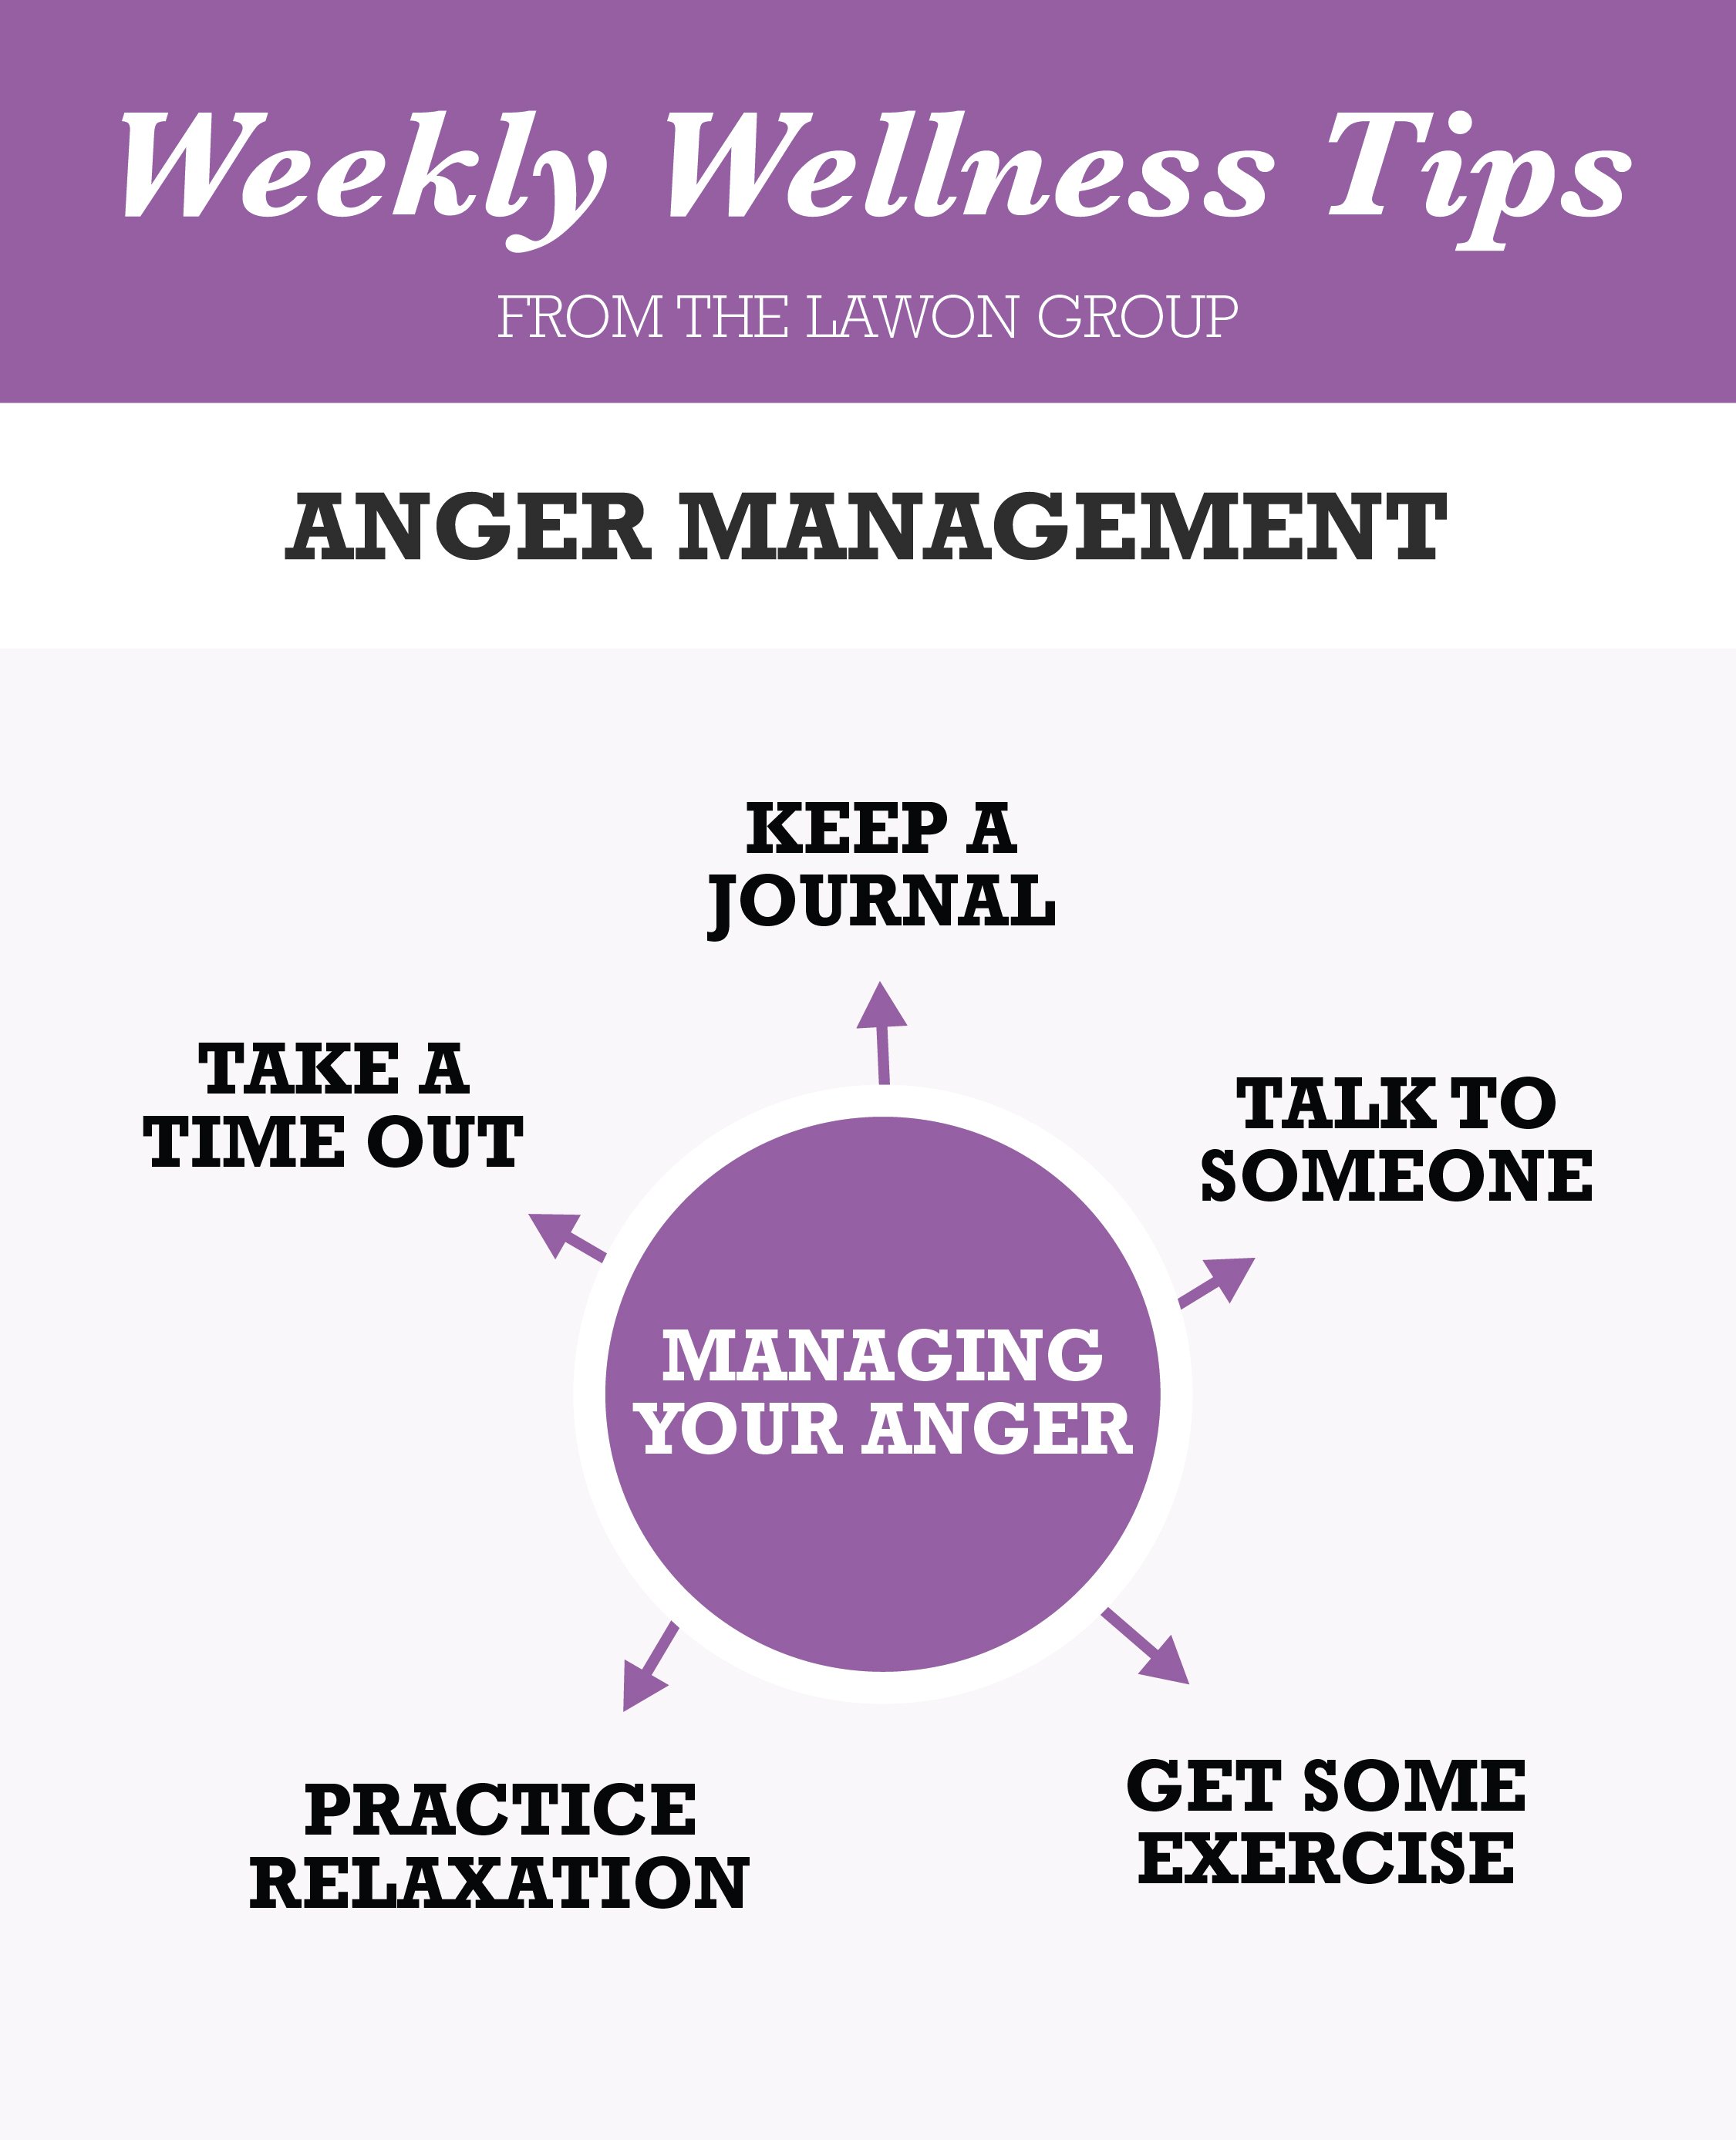 TLG22005 Wellness Tips Anger Management Infographic-1080px-01